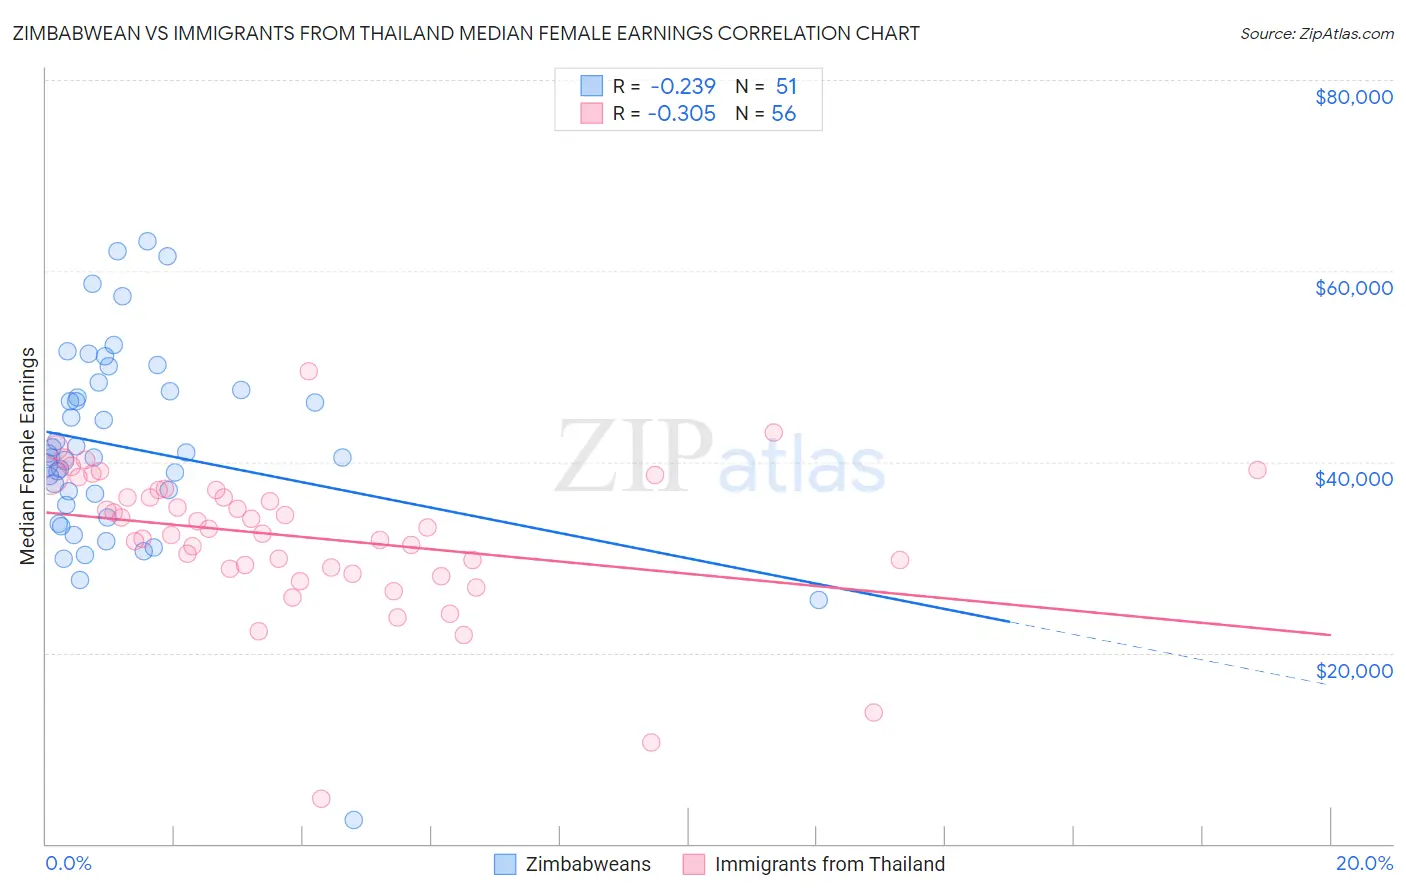 Zimbabwean vs Immigrants from Thailand Median Female Earnings